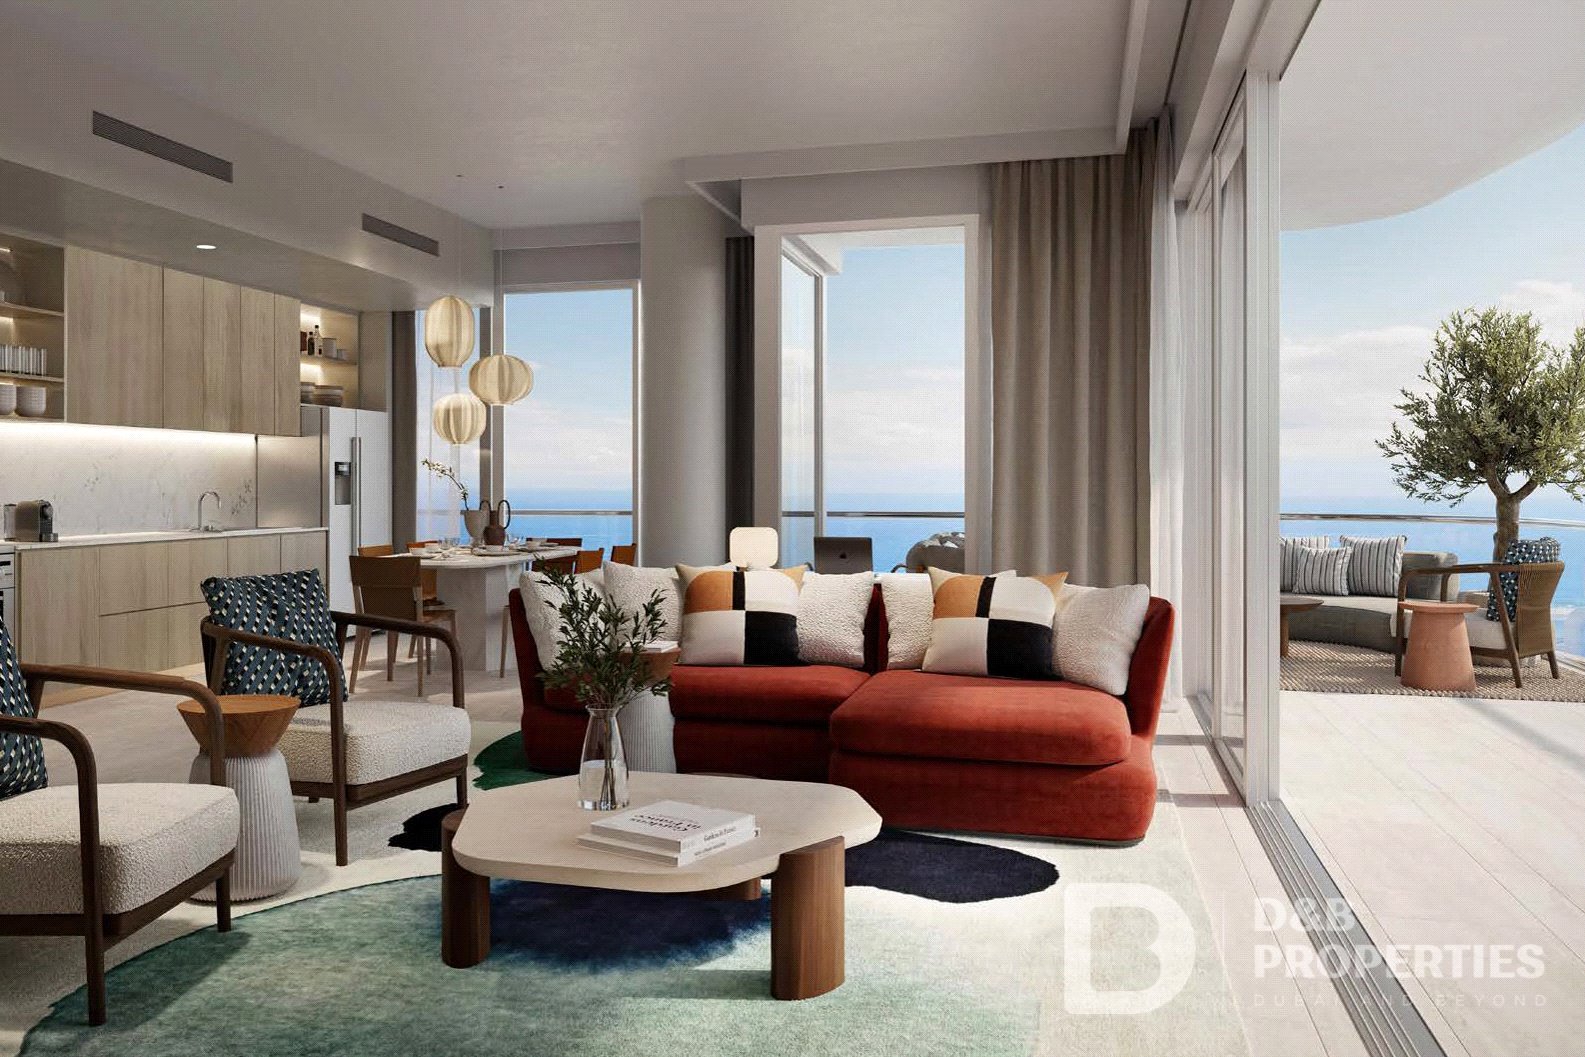 High Floor | Stunning Layout | Full Marina View